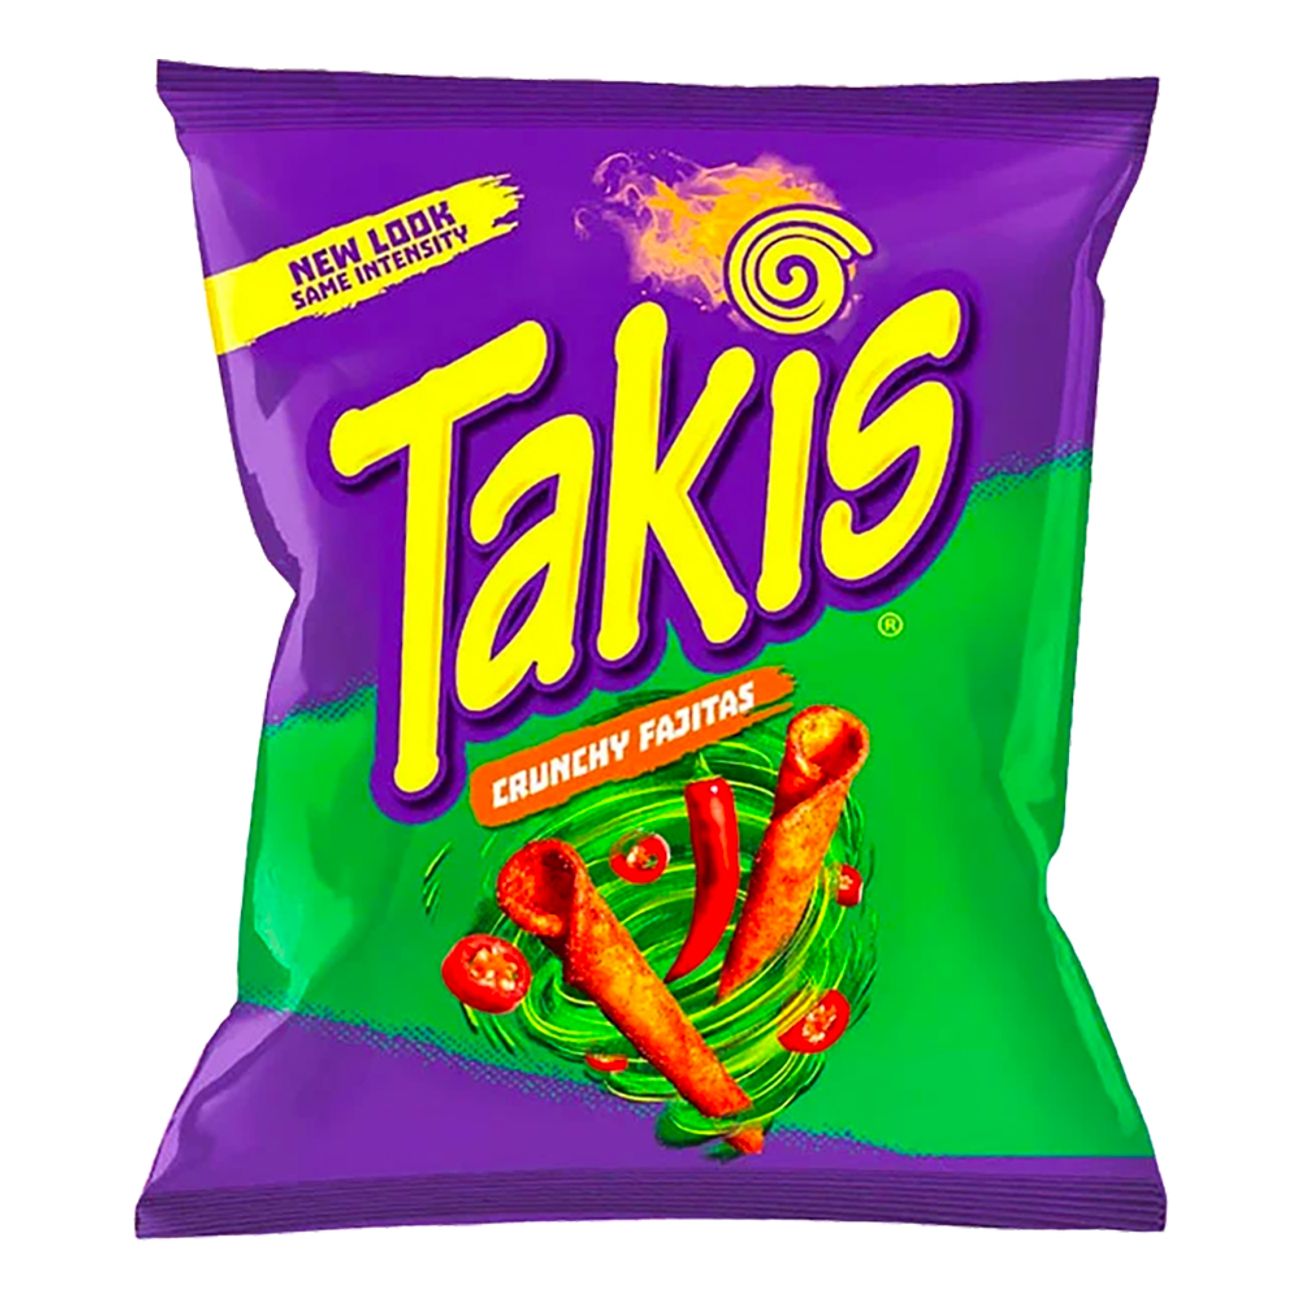 takis-crunchy-fajitas-101067-1